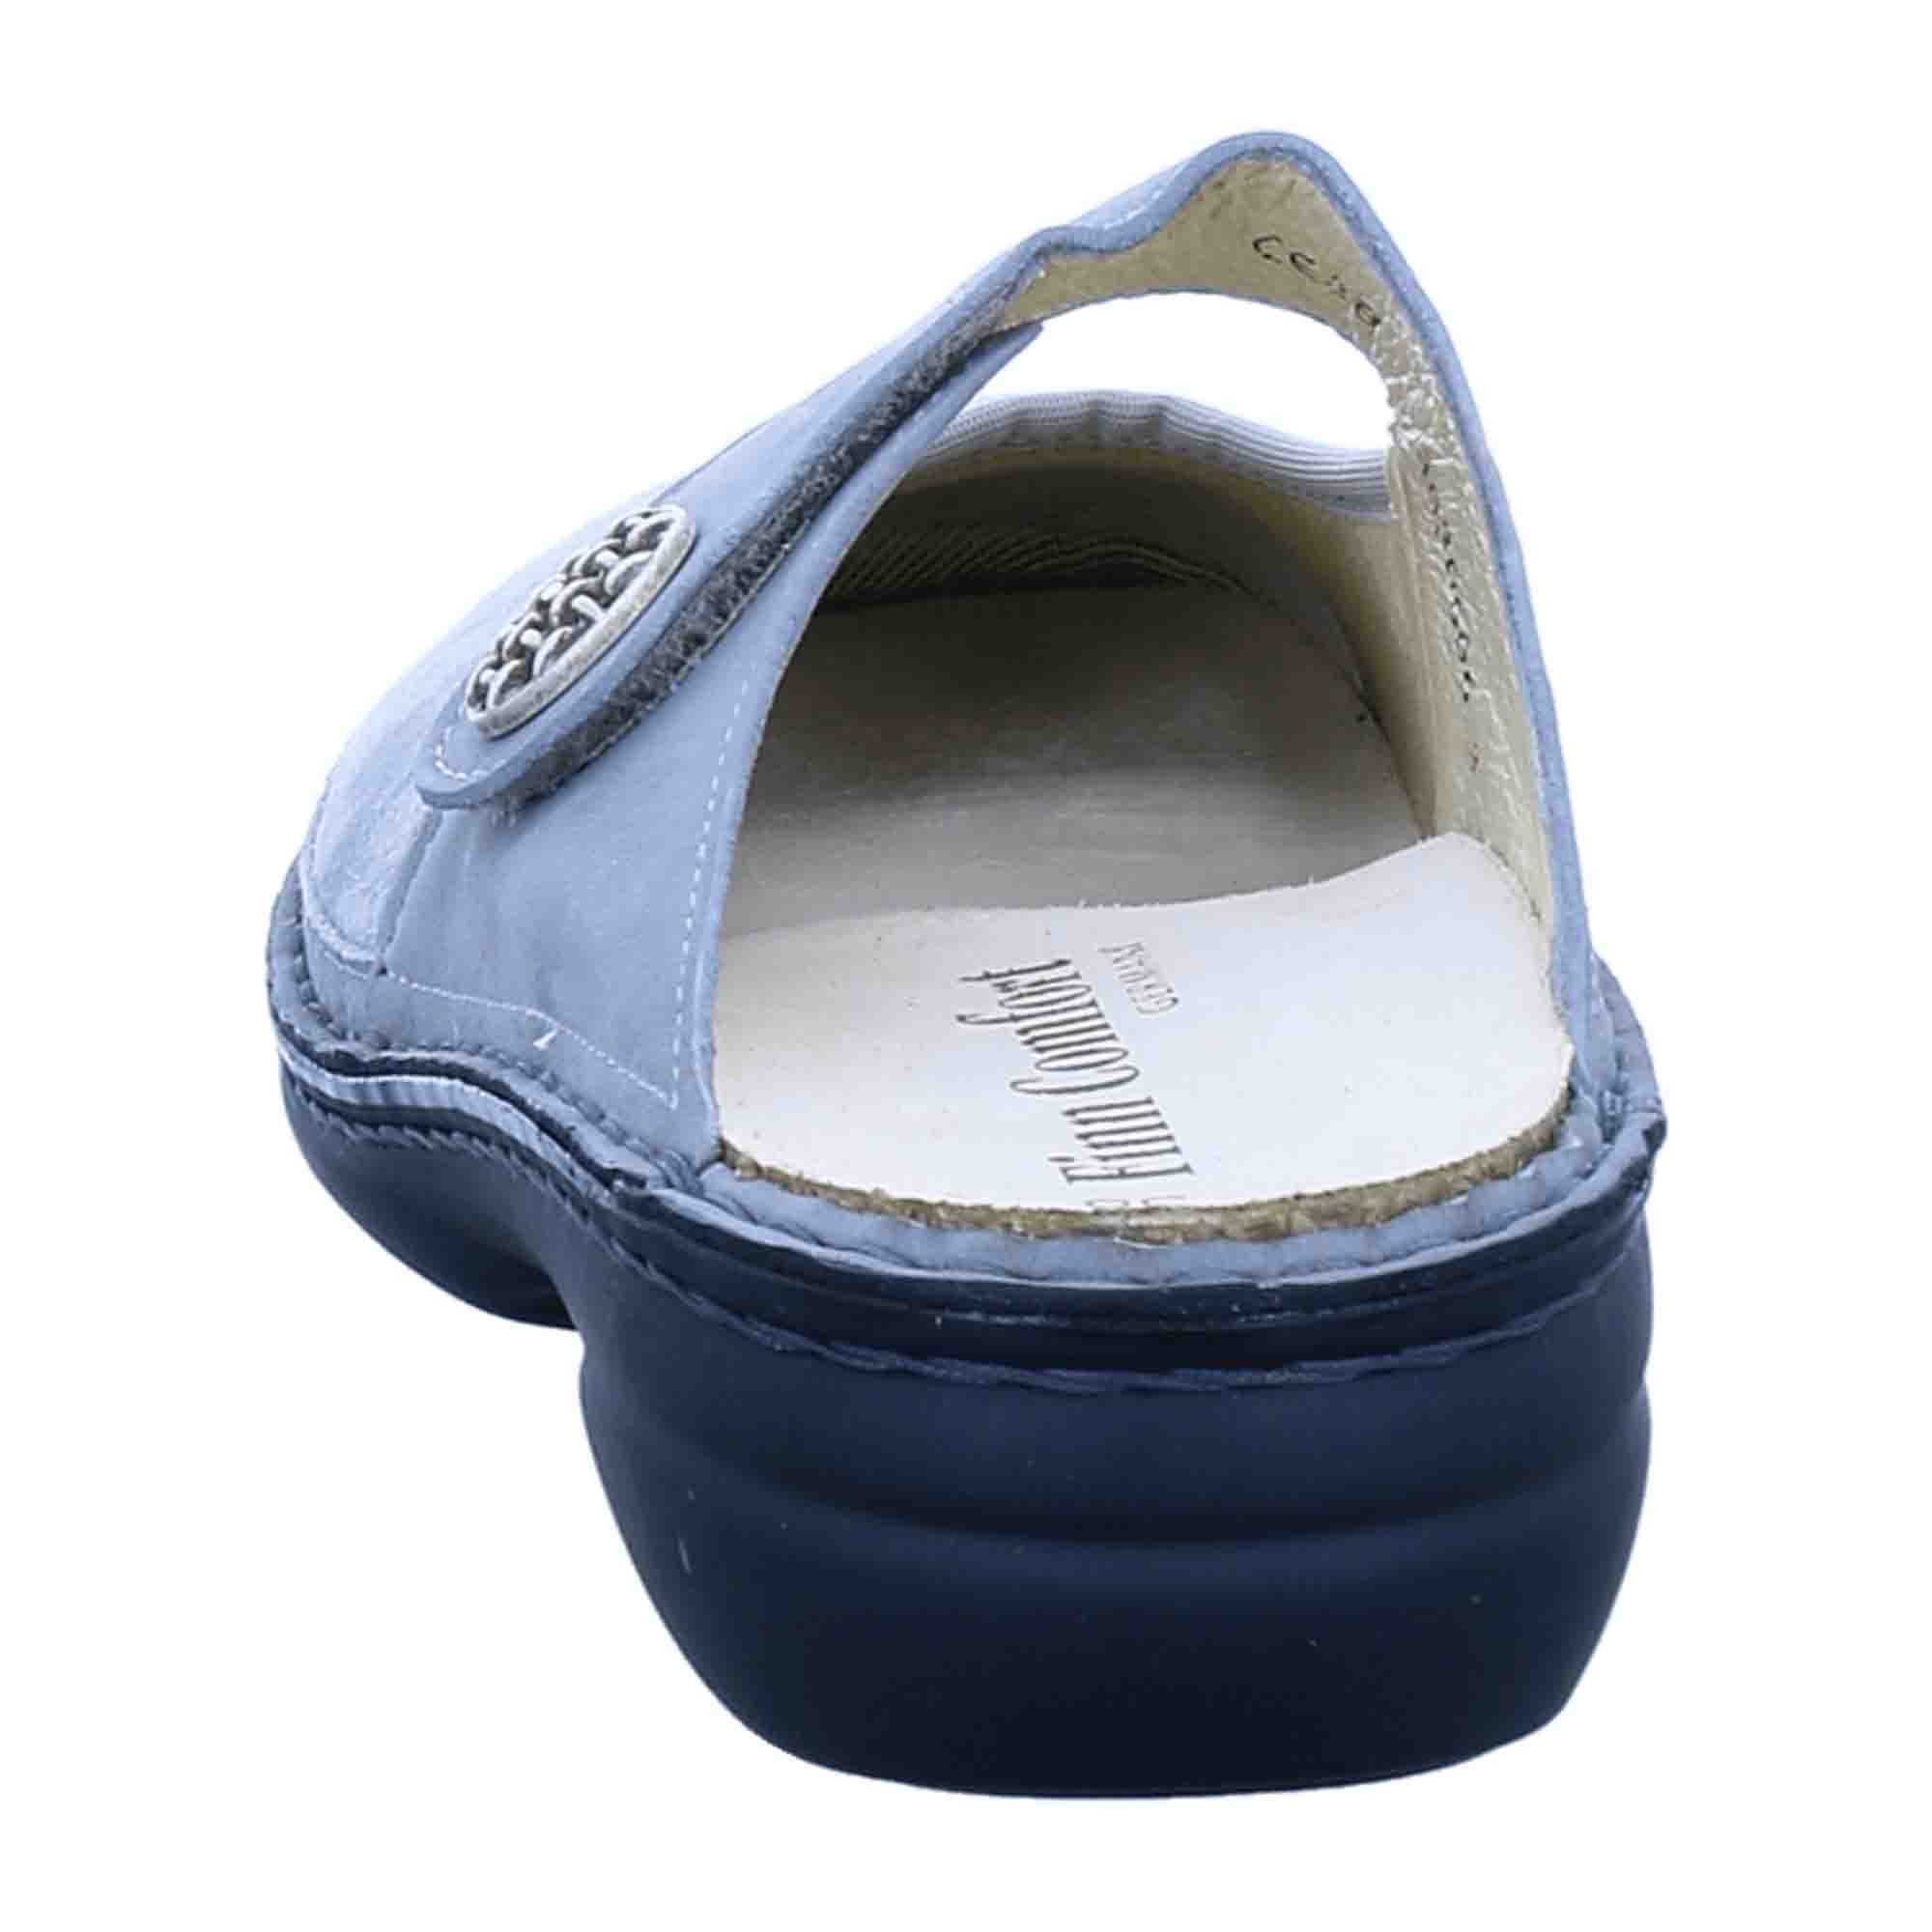 Finn Comfort Asinara Women's Stylish Grey Comfort Sandals